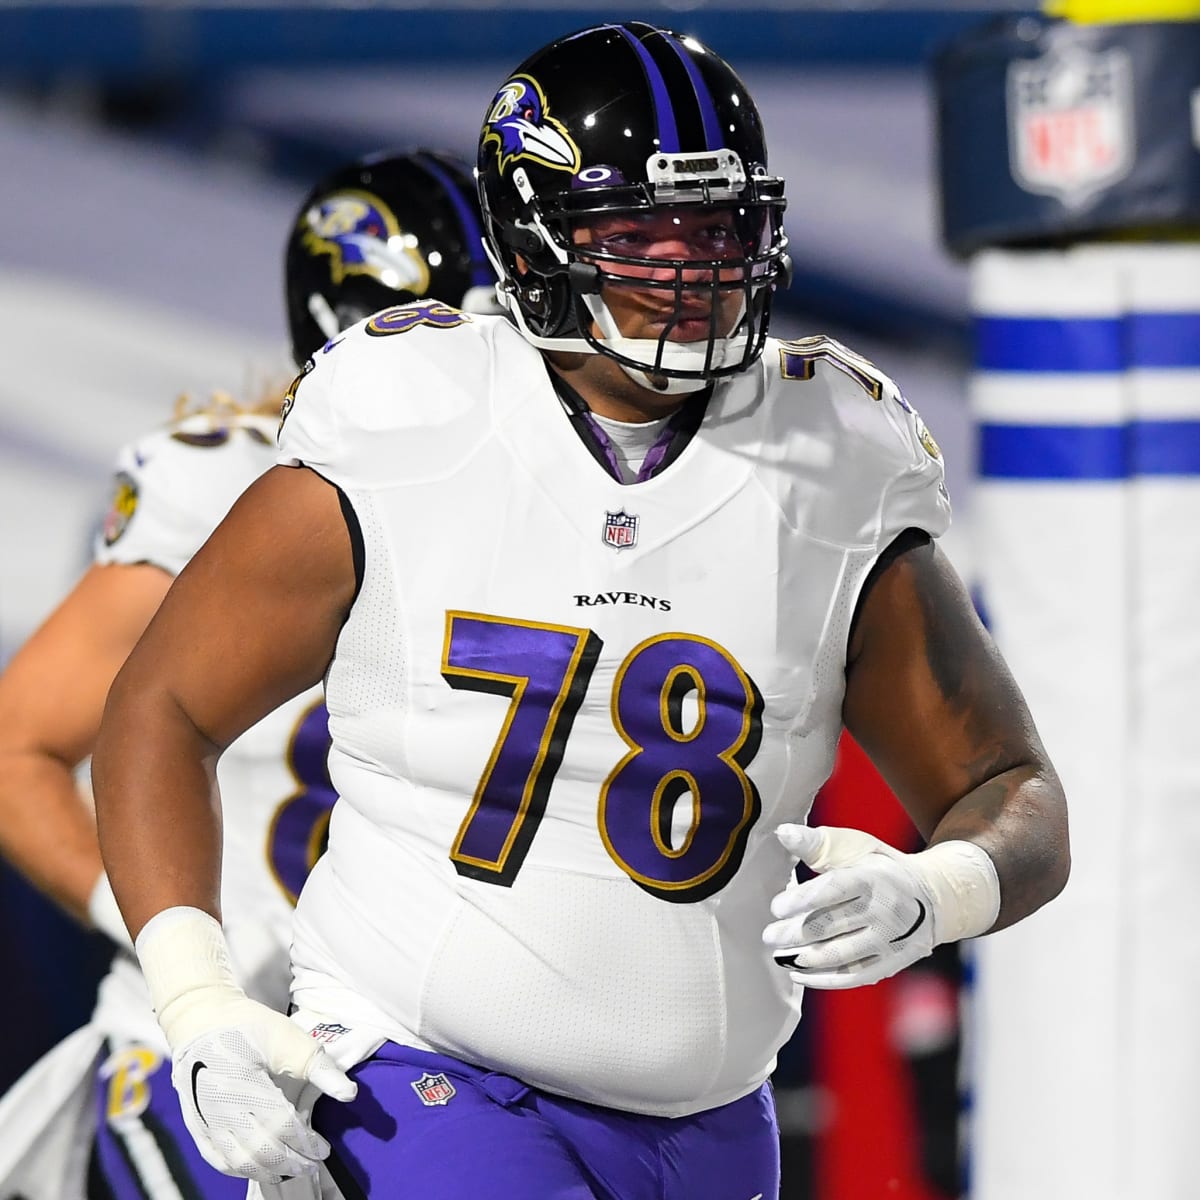 Hunt could reunite with Toledo jersey number after NFL rule change